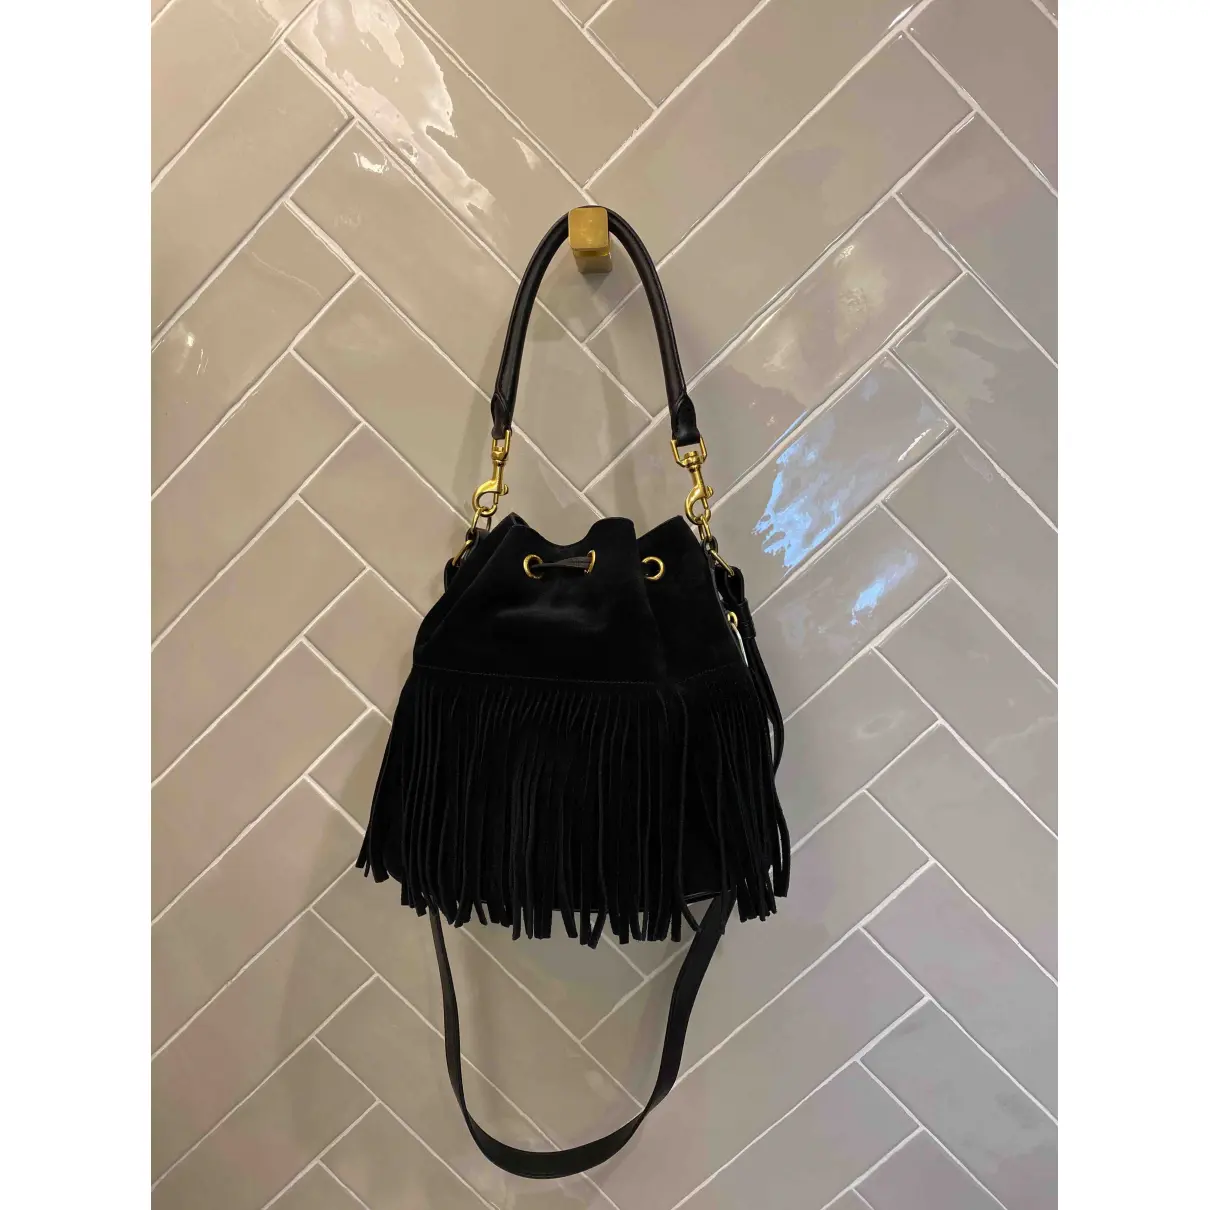 Buy Saint Laurent Emmanuelle handbag online